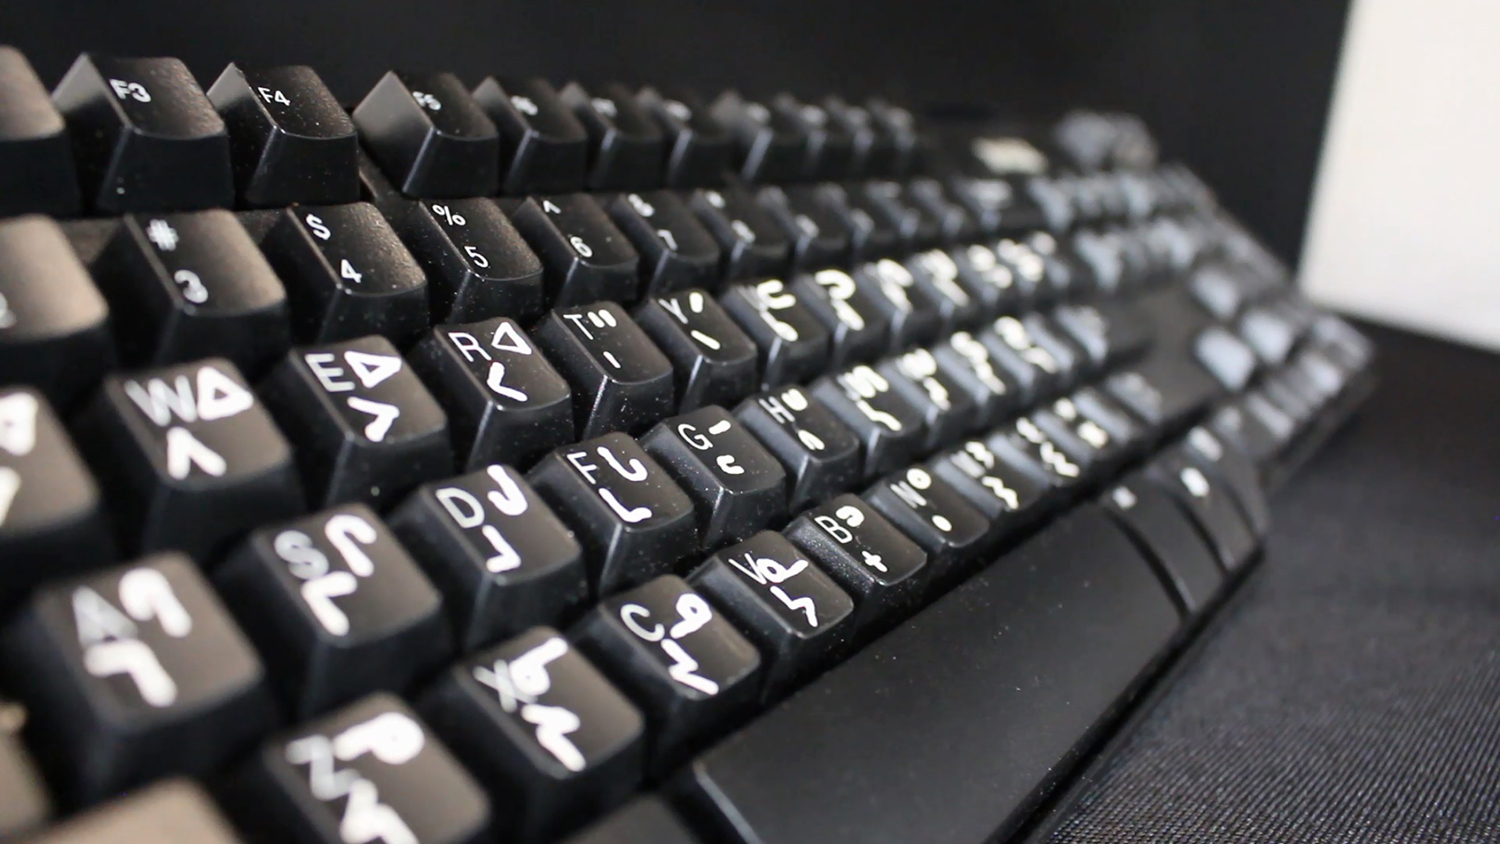 A computer keyboard with English, Ininiwag, and Anishininiwag syllabics on the keys.